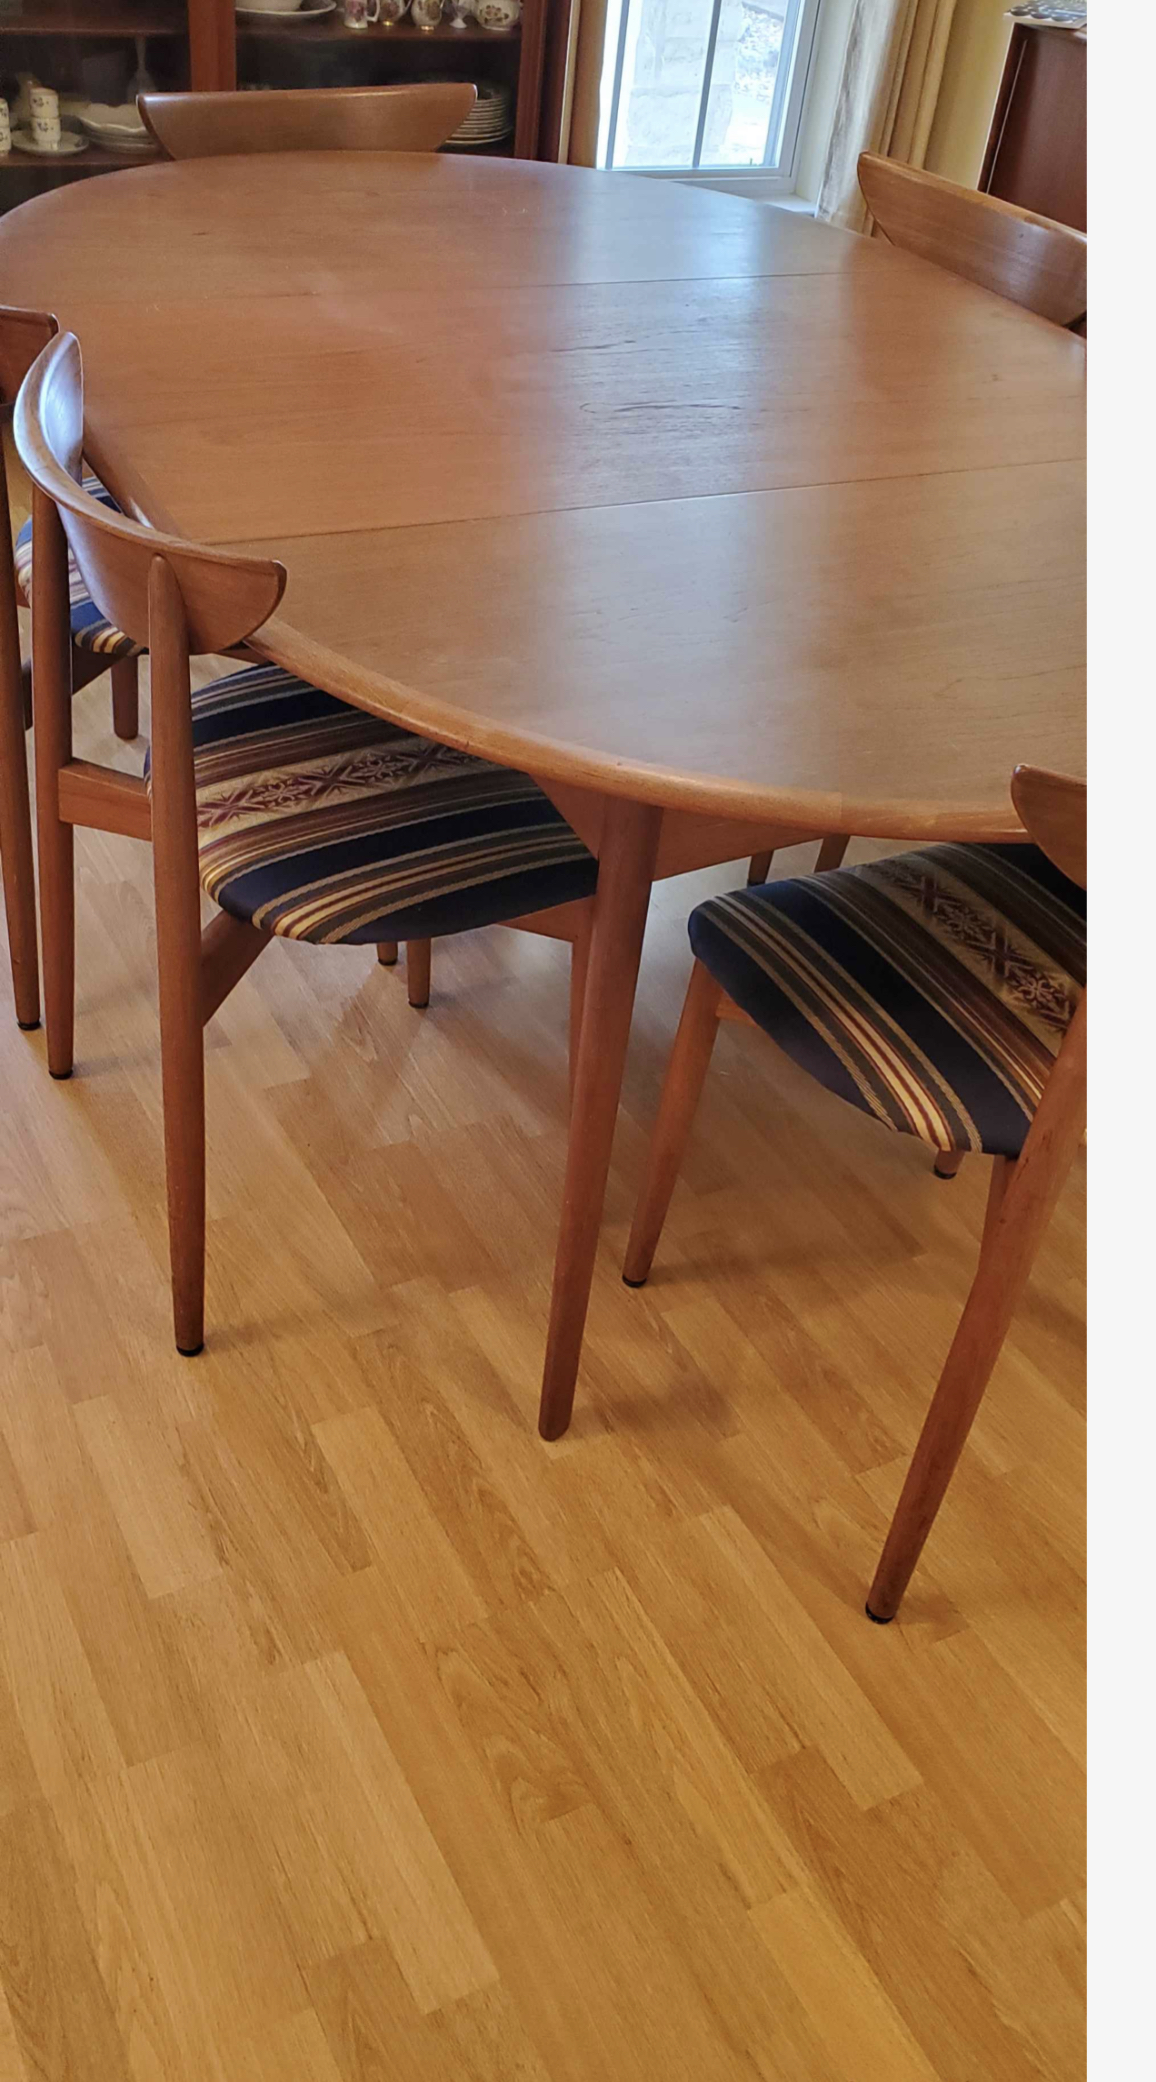 1652217604-tablechairs.jpeg